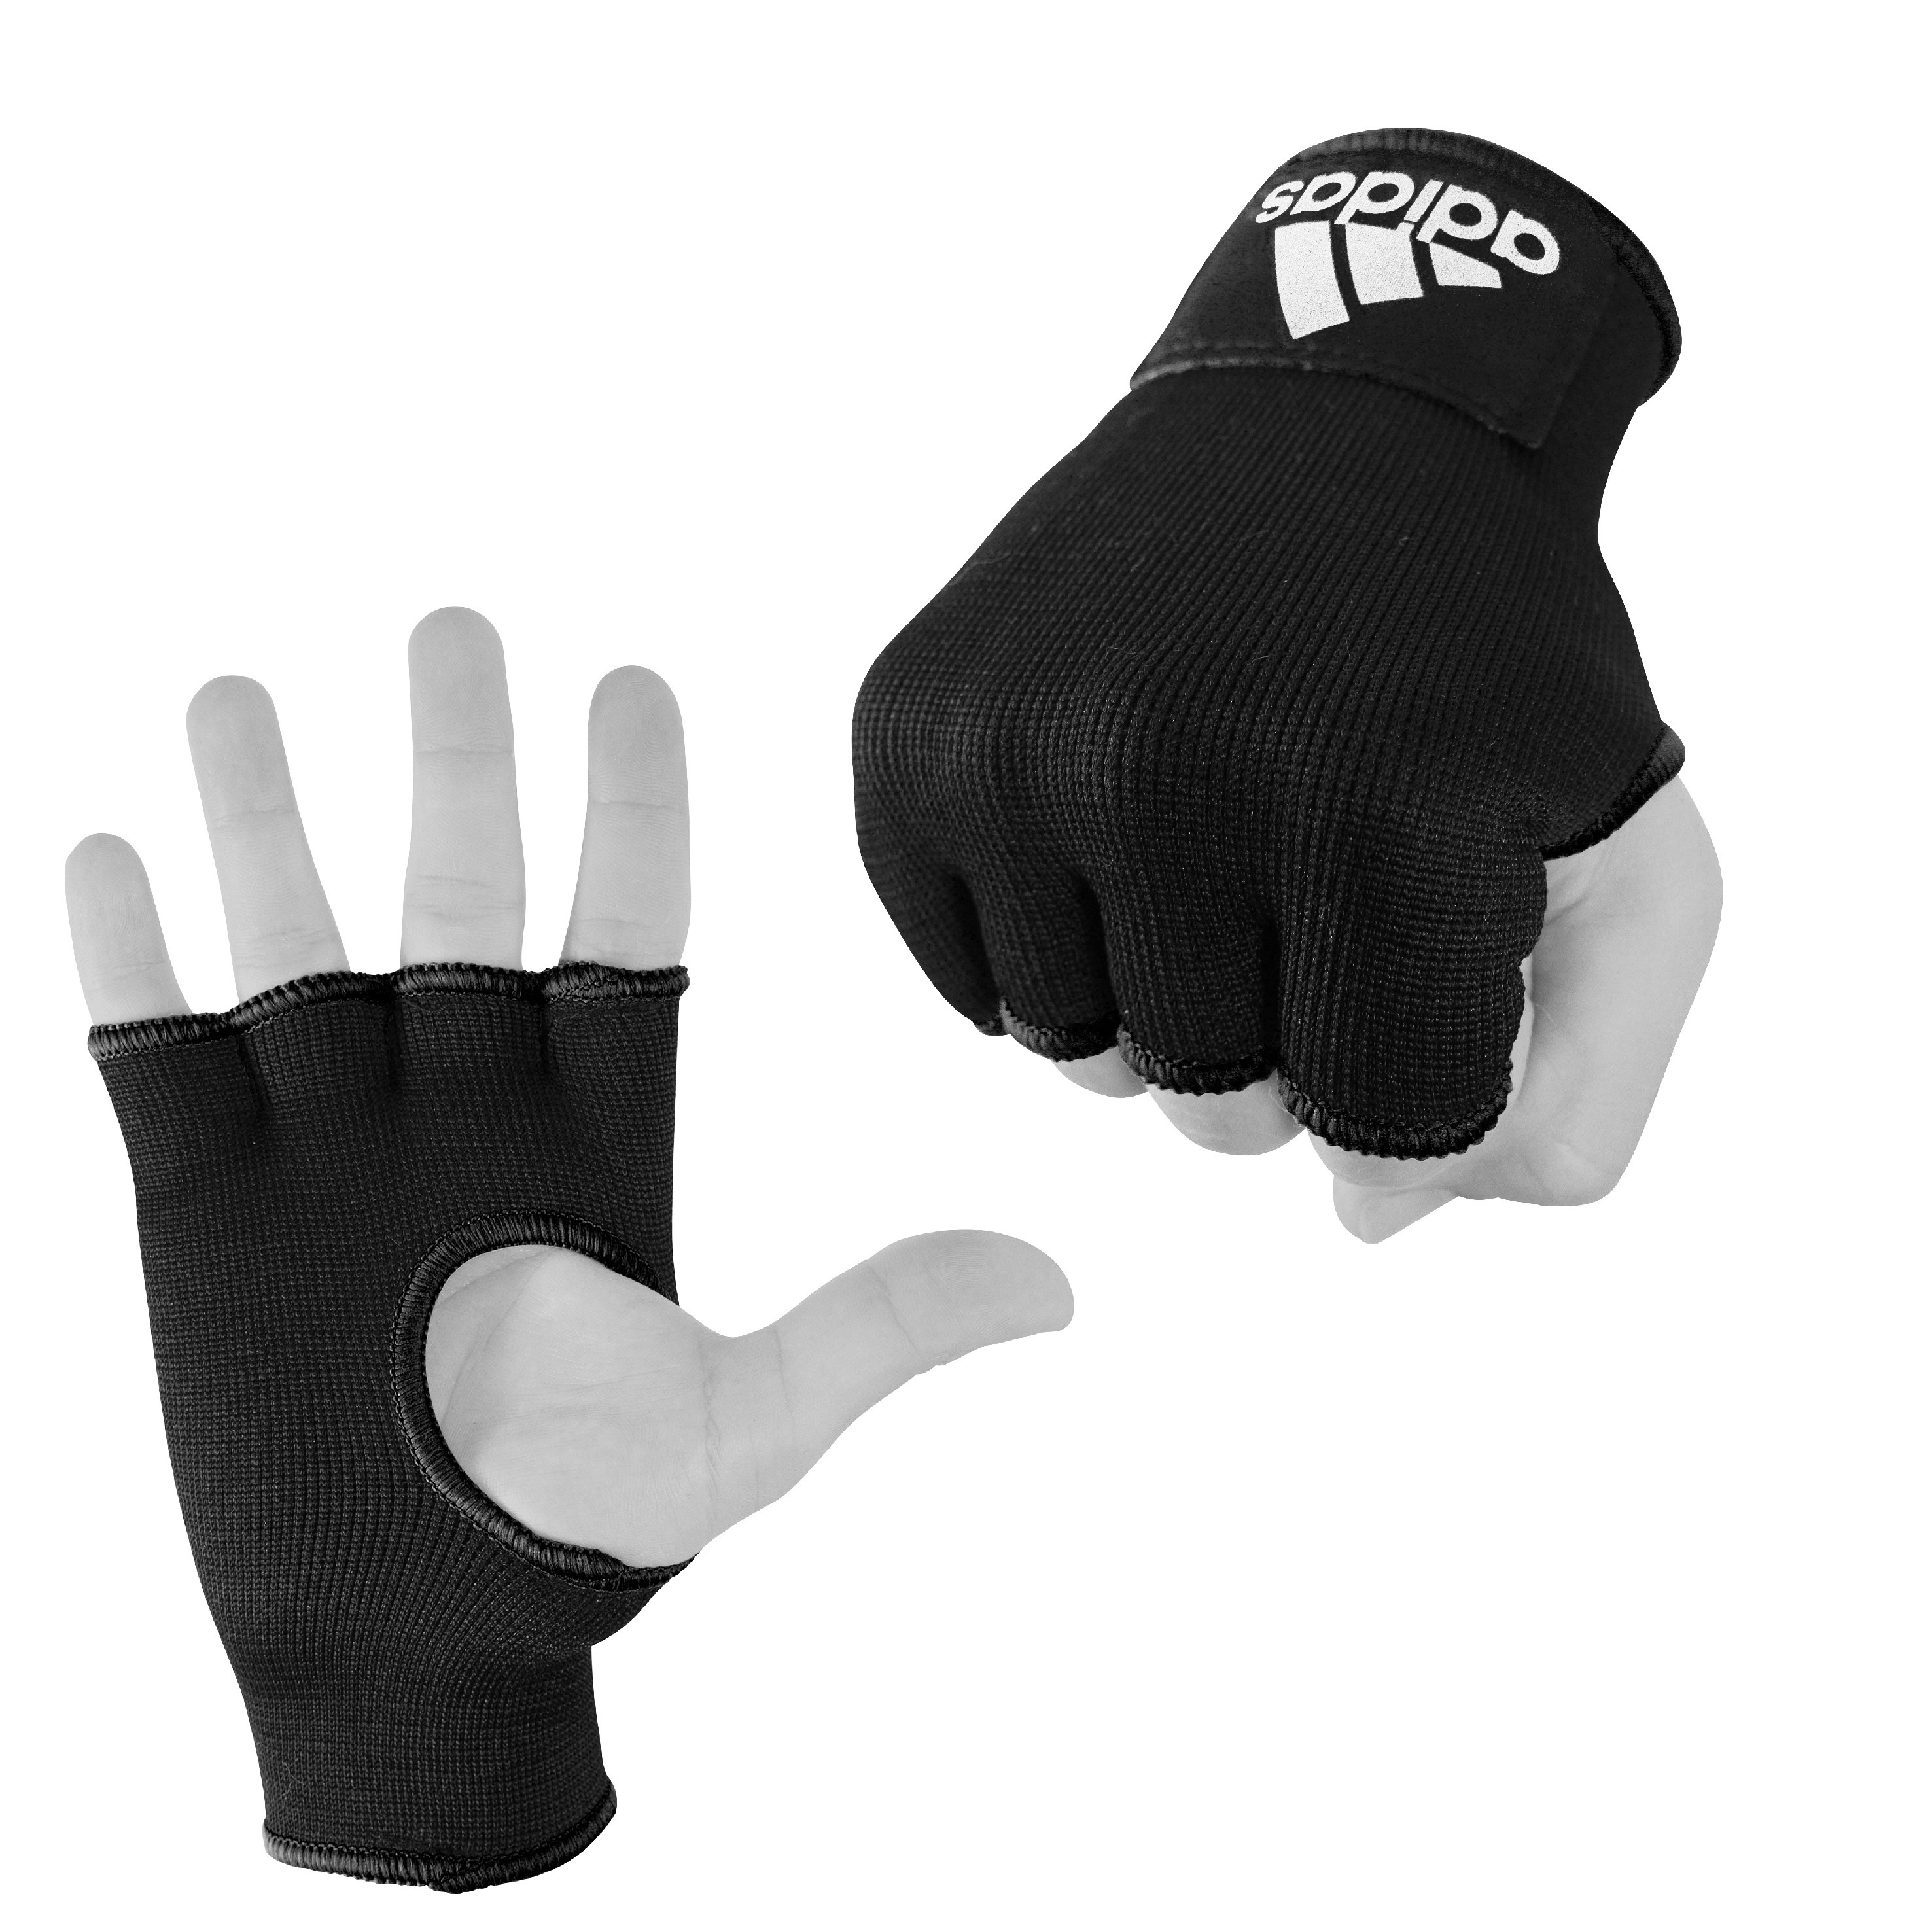 Sous-gants en gel & bandes de maintien - ADIBP012, Adidas 